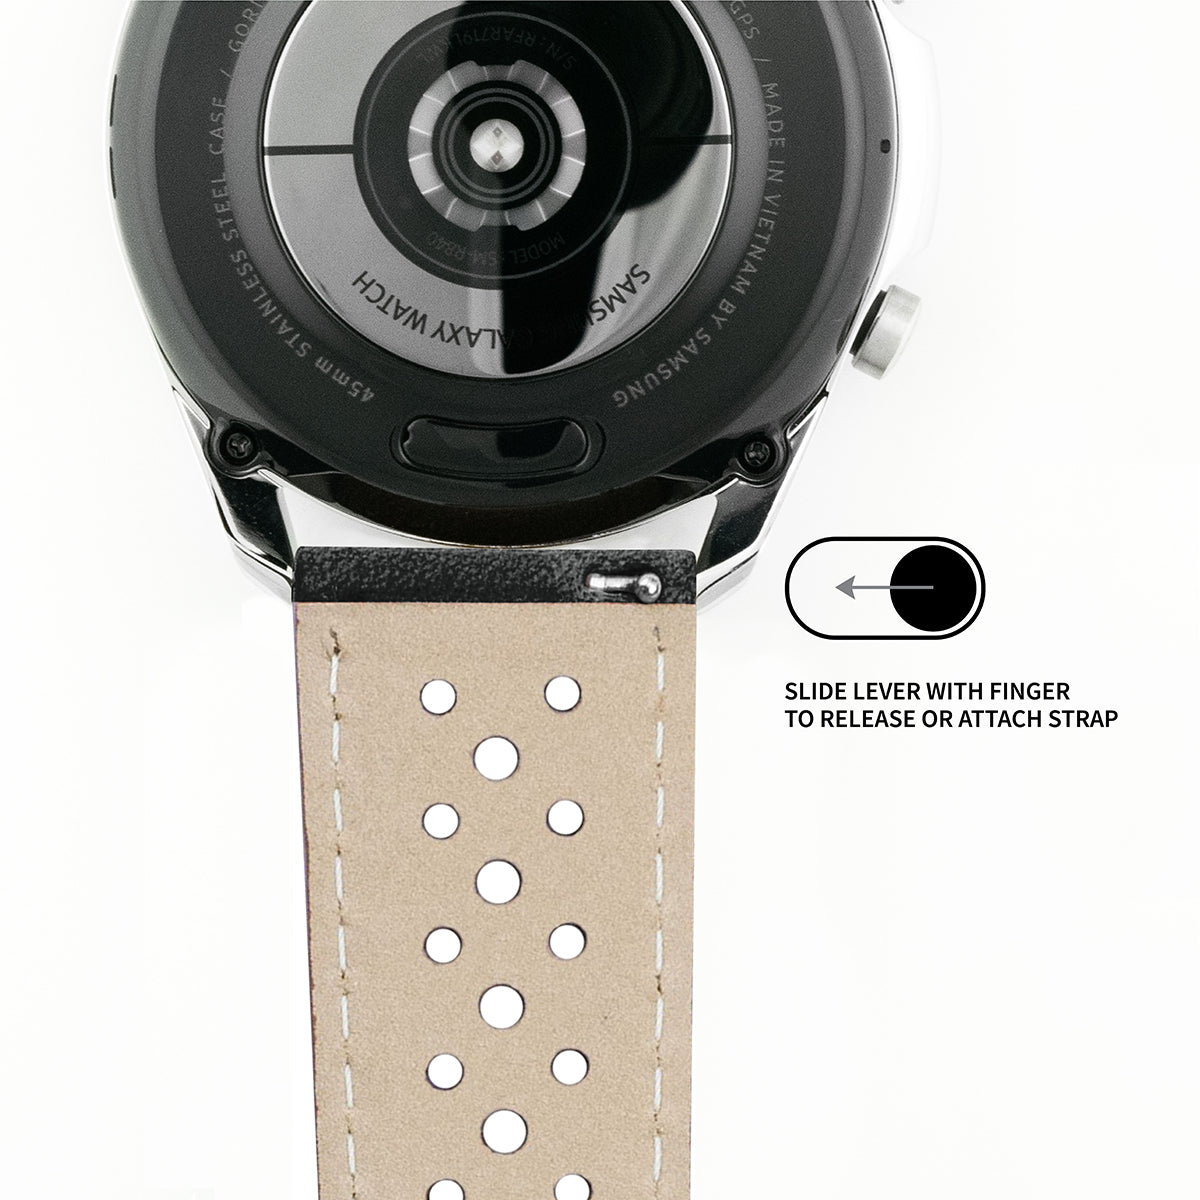 Samsung Galaxy Watch3 Racing Horween Leather Black Blue Stitch Watch Band